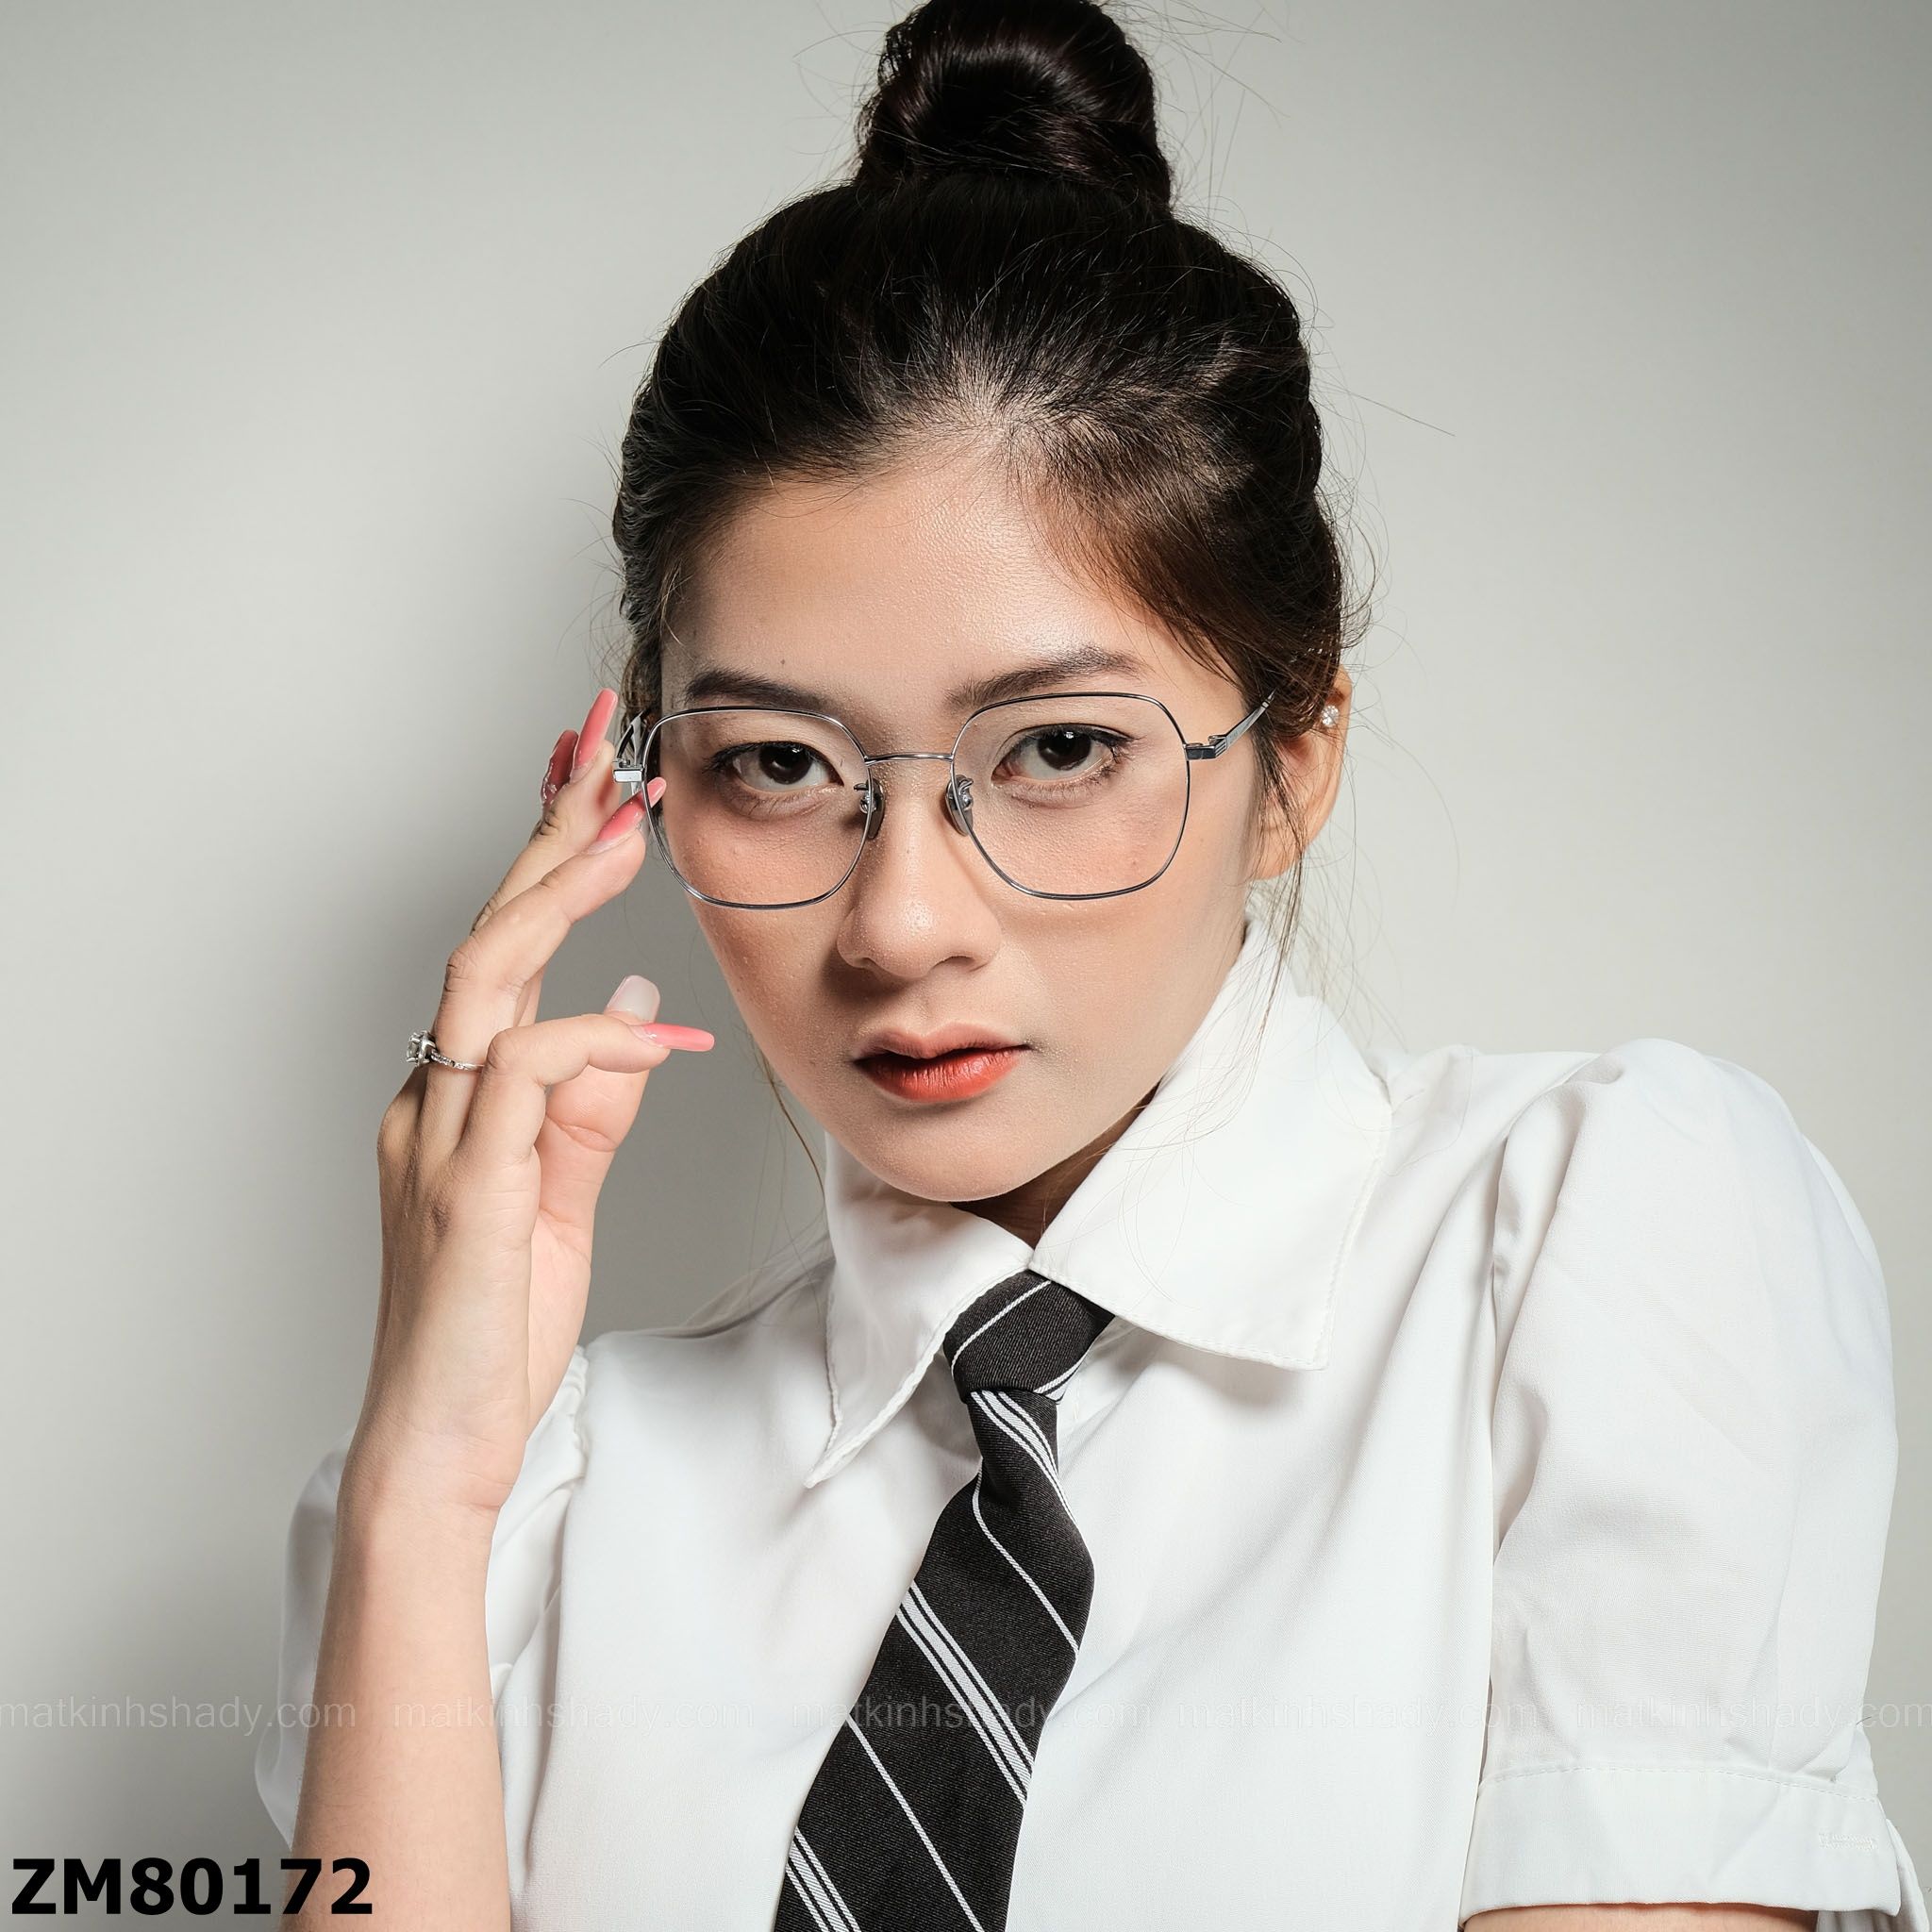  ZAMA Eyewear - Glasses - ZM80172 